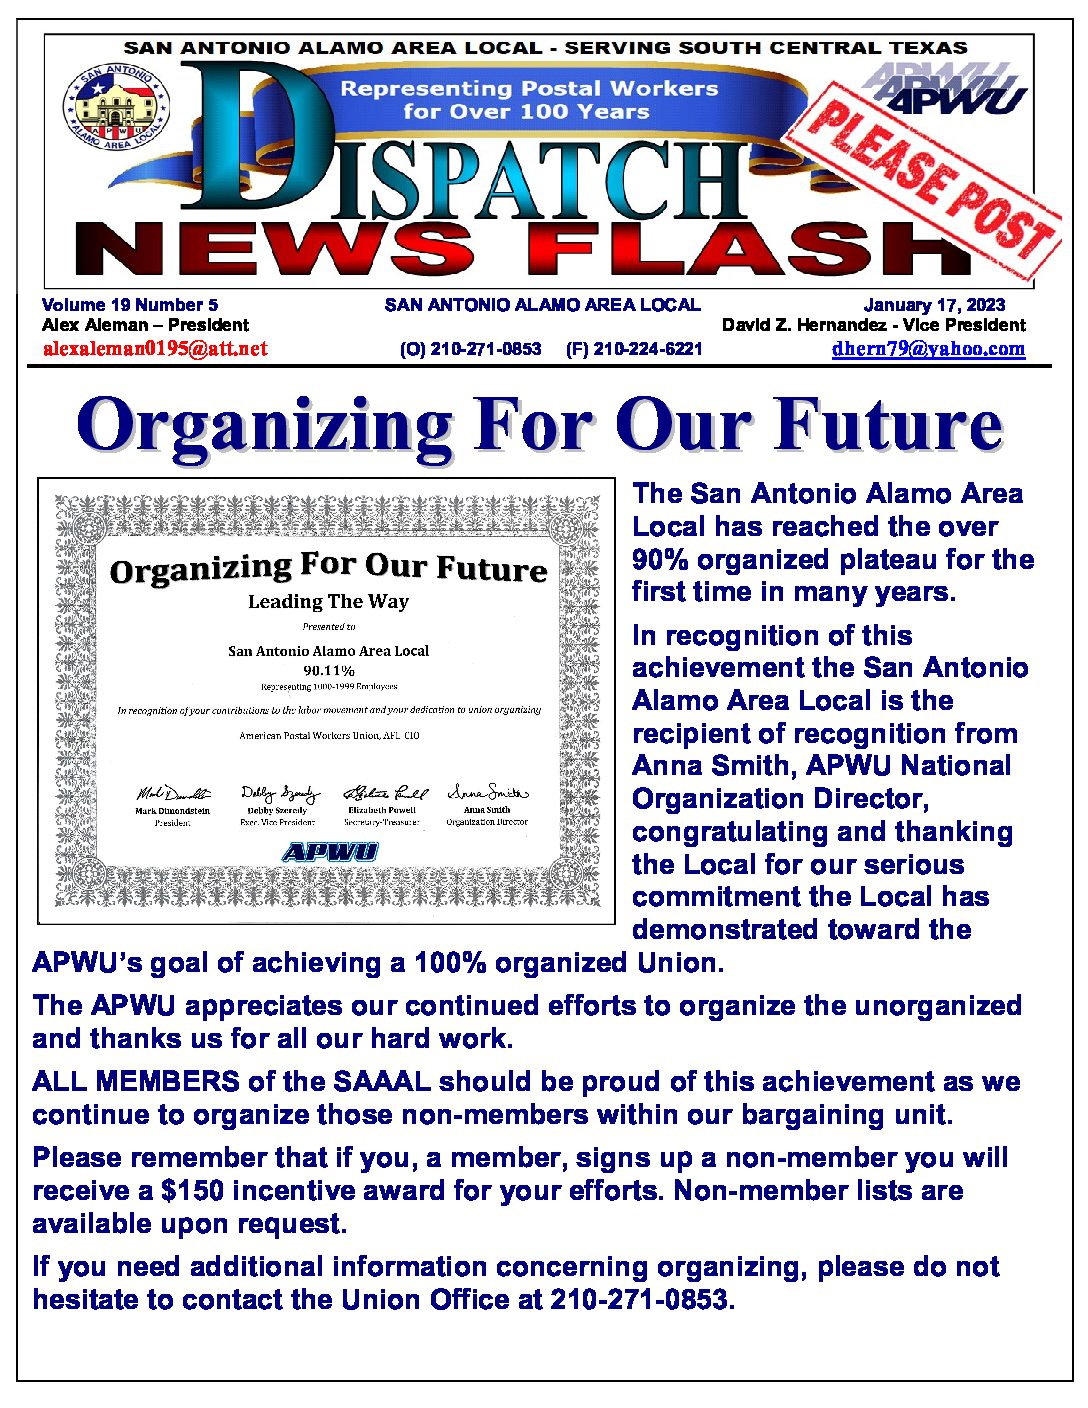 NewsFlash 19-5 Organizing For Our Future Award - 